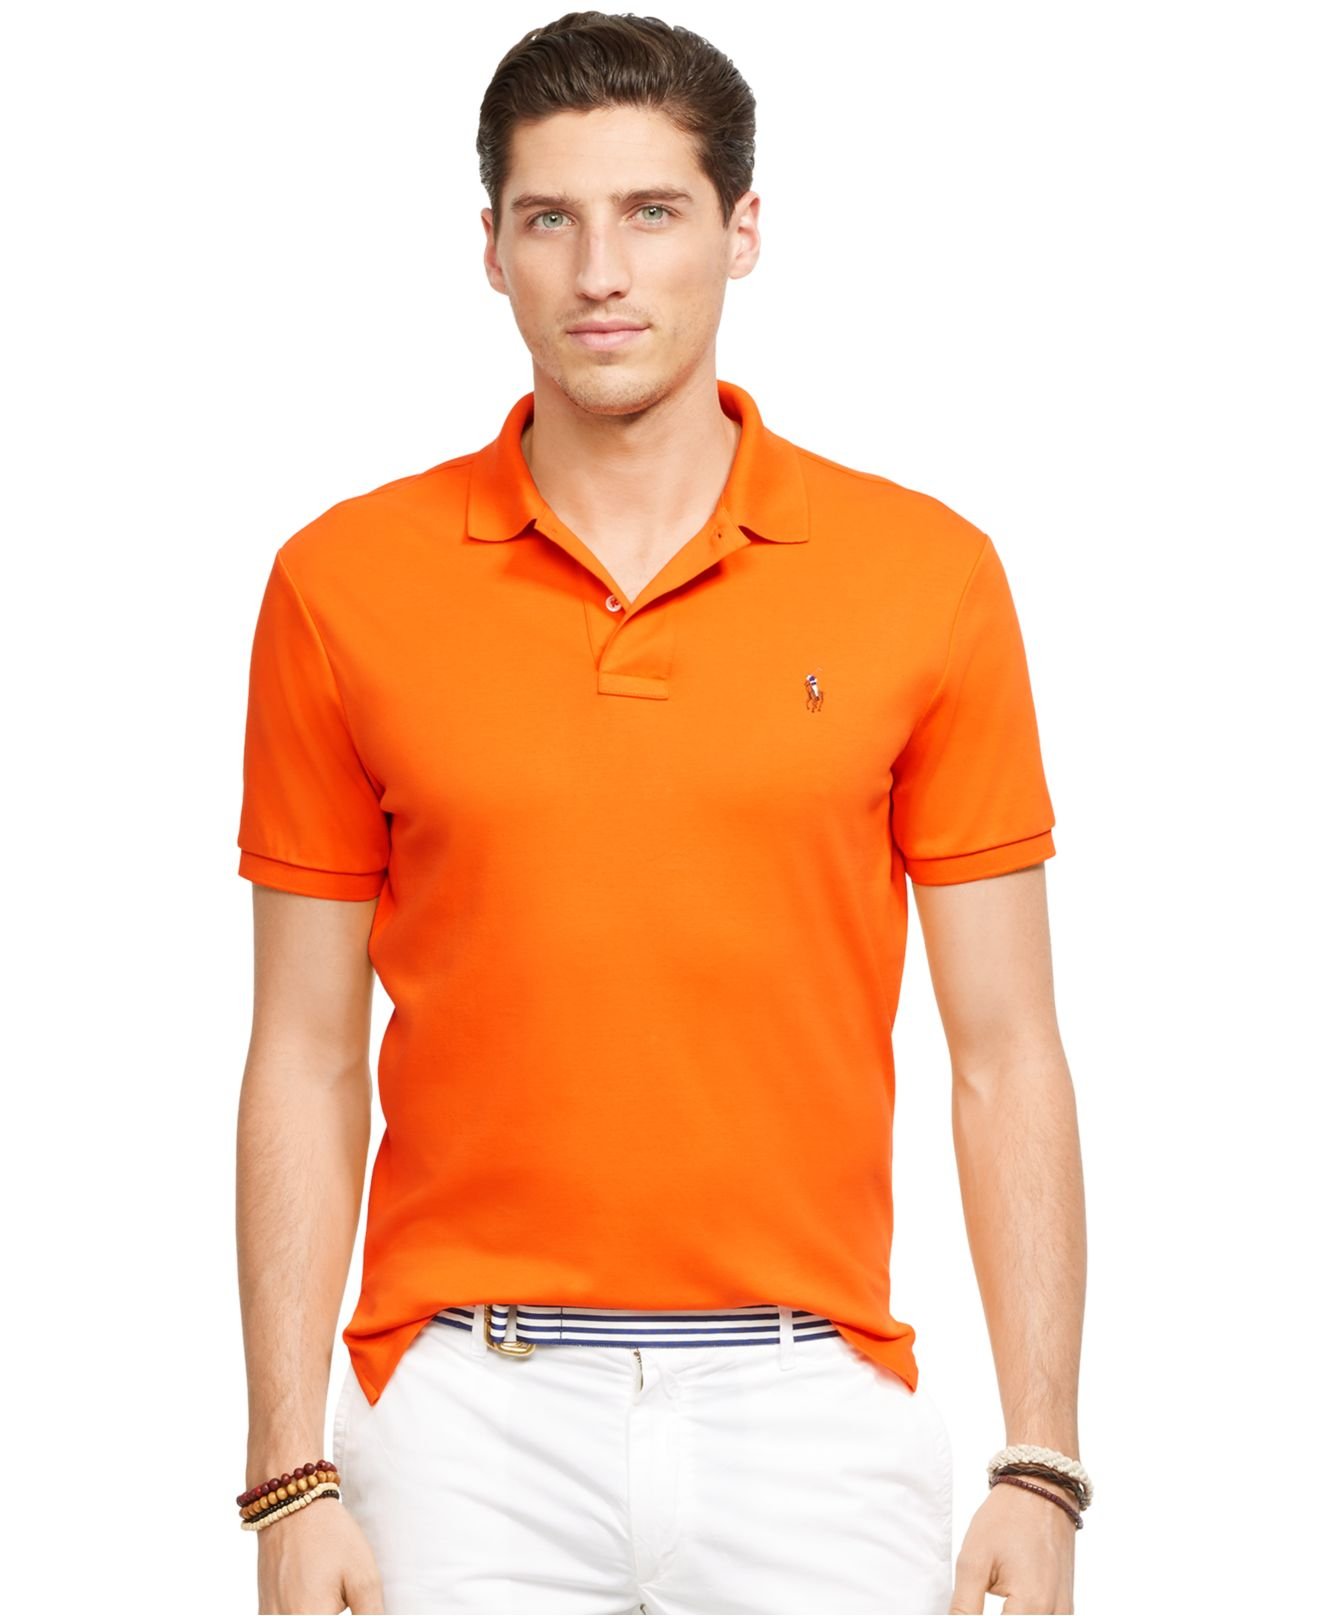 Polo Ralph Lauren Pima Soft-Touch Polo Shirt in Orange for Men - Lyst